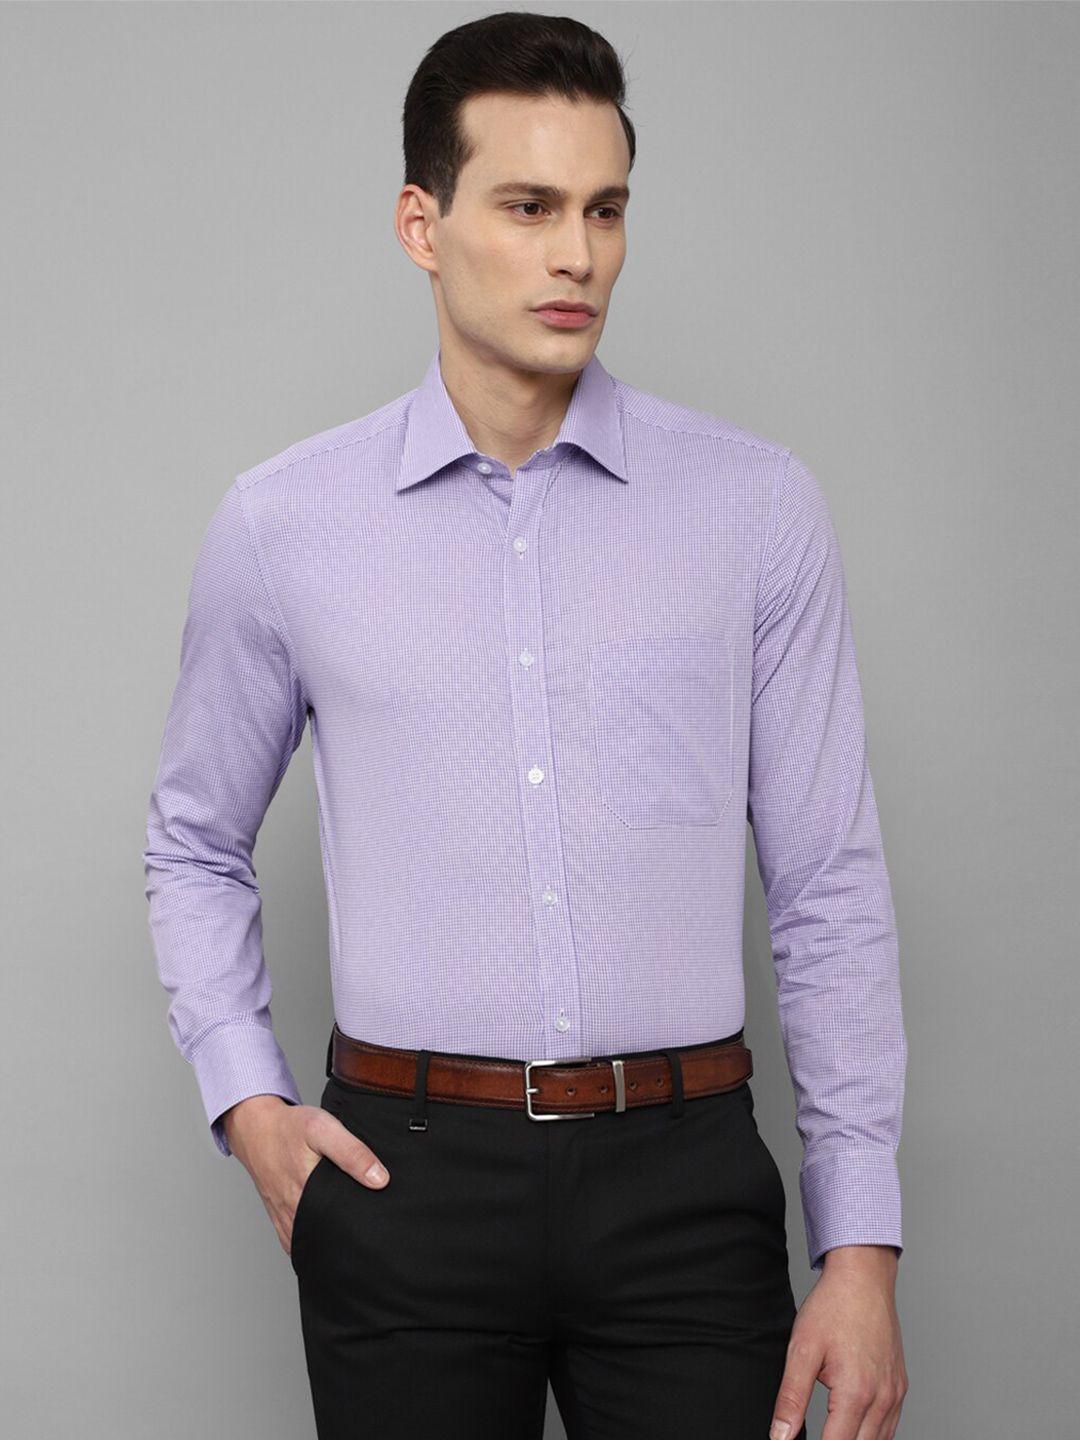 louis philippe men purple formal shirt